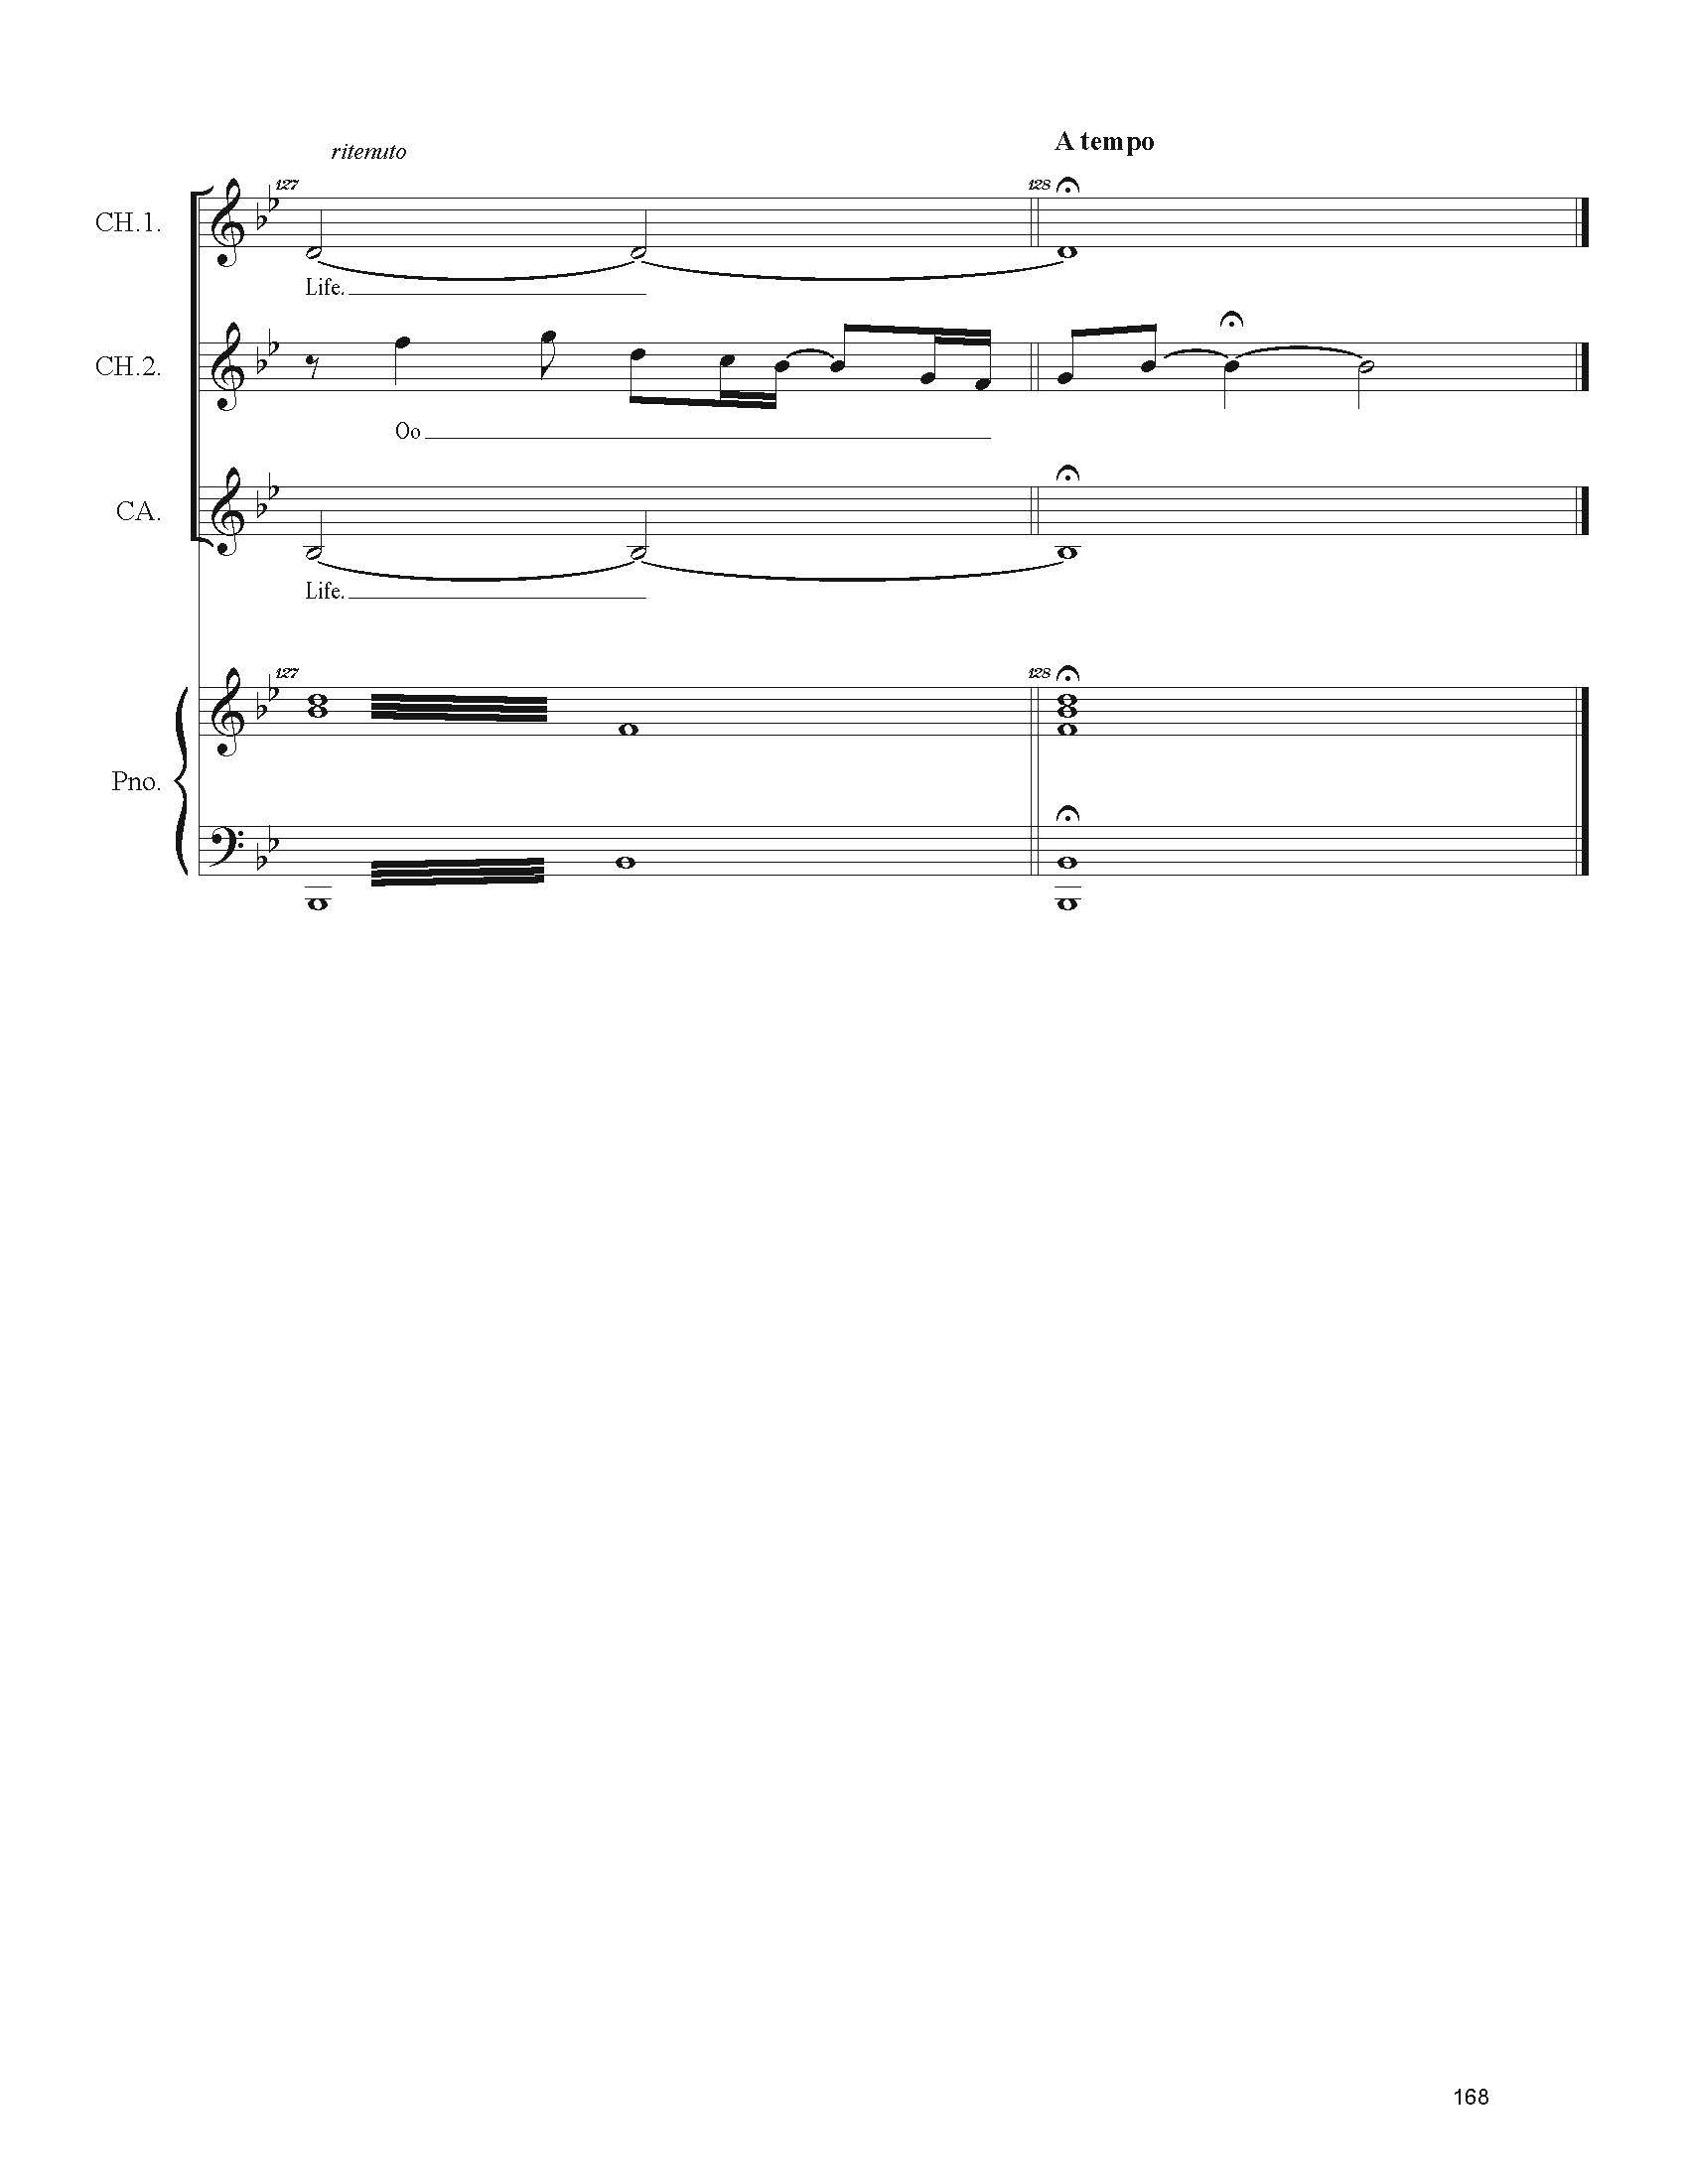 FULL PIANO VOCAL SCORE DRAFT 1 - Score_Page_168.jpg